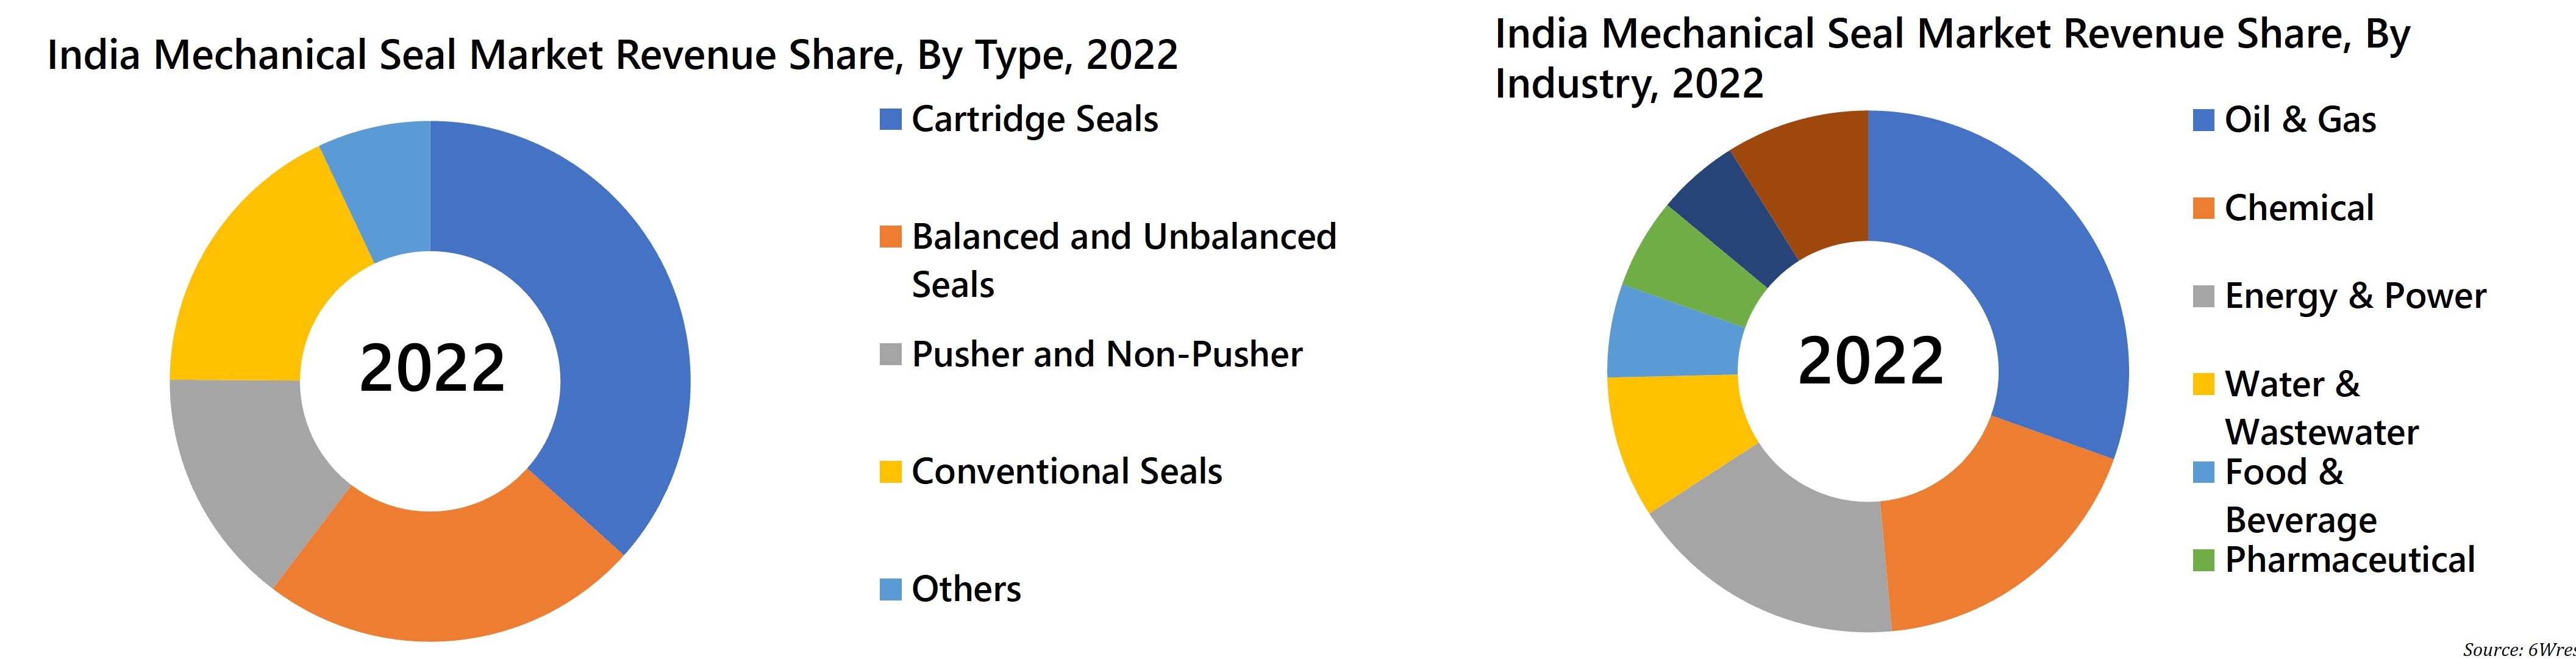 India Mechanical Seal Market Revenue Share